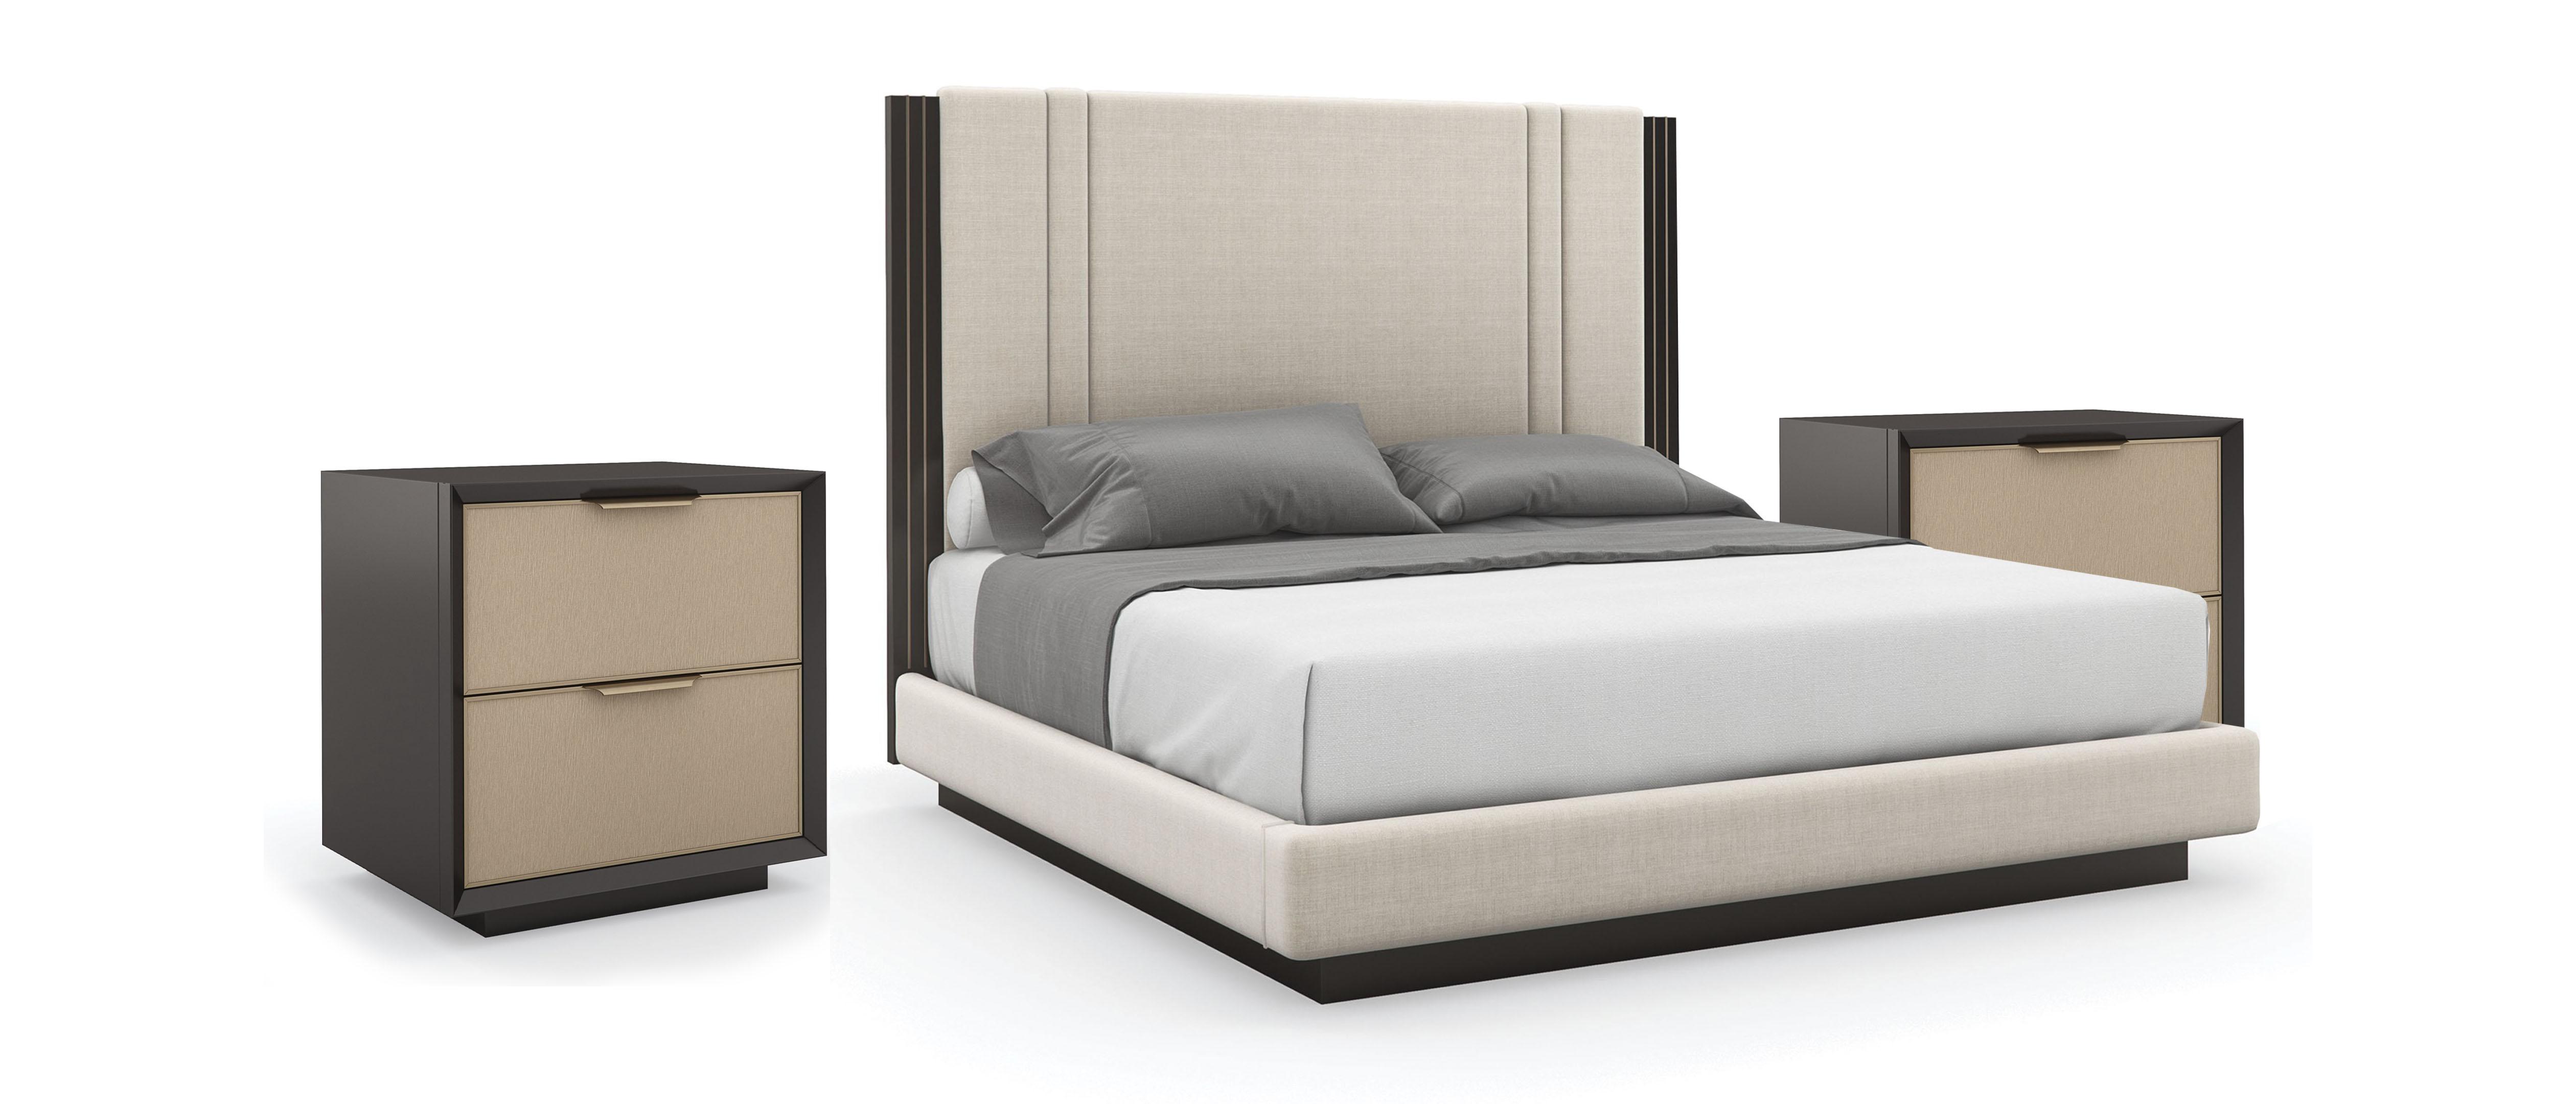 Contemporary Platform Bed Set DECENT PROPOSAL / DOUBLE WRAP CLA-020-105-Set-3 in Light Gray Fabric